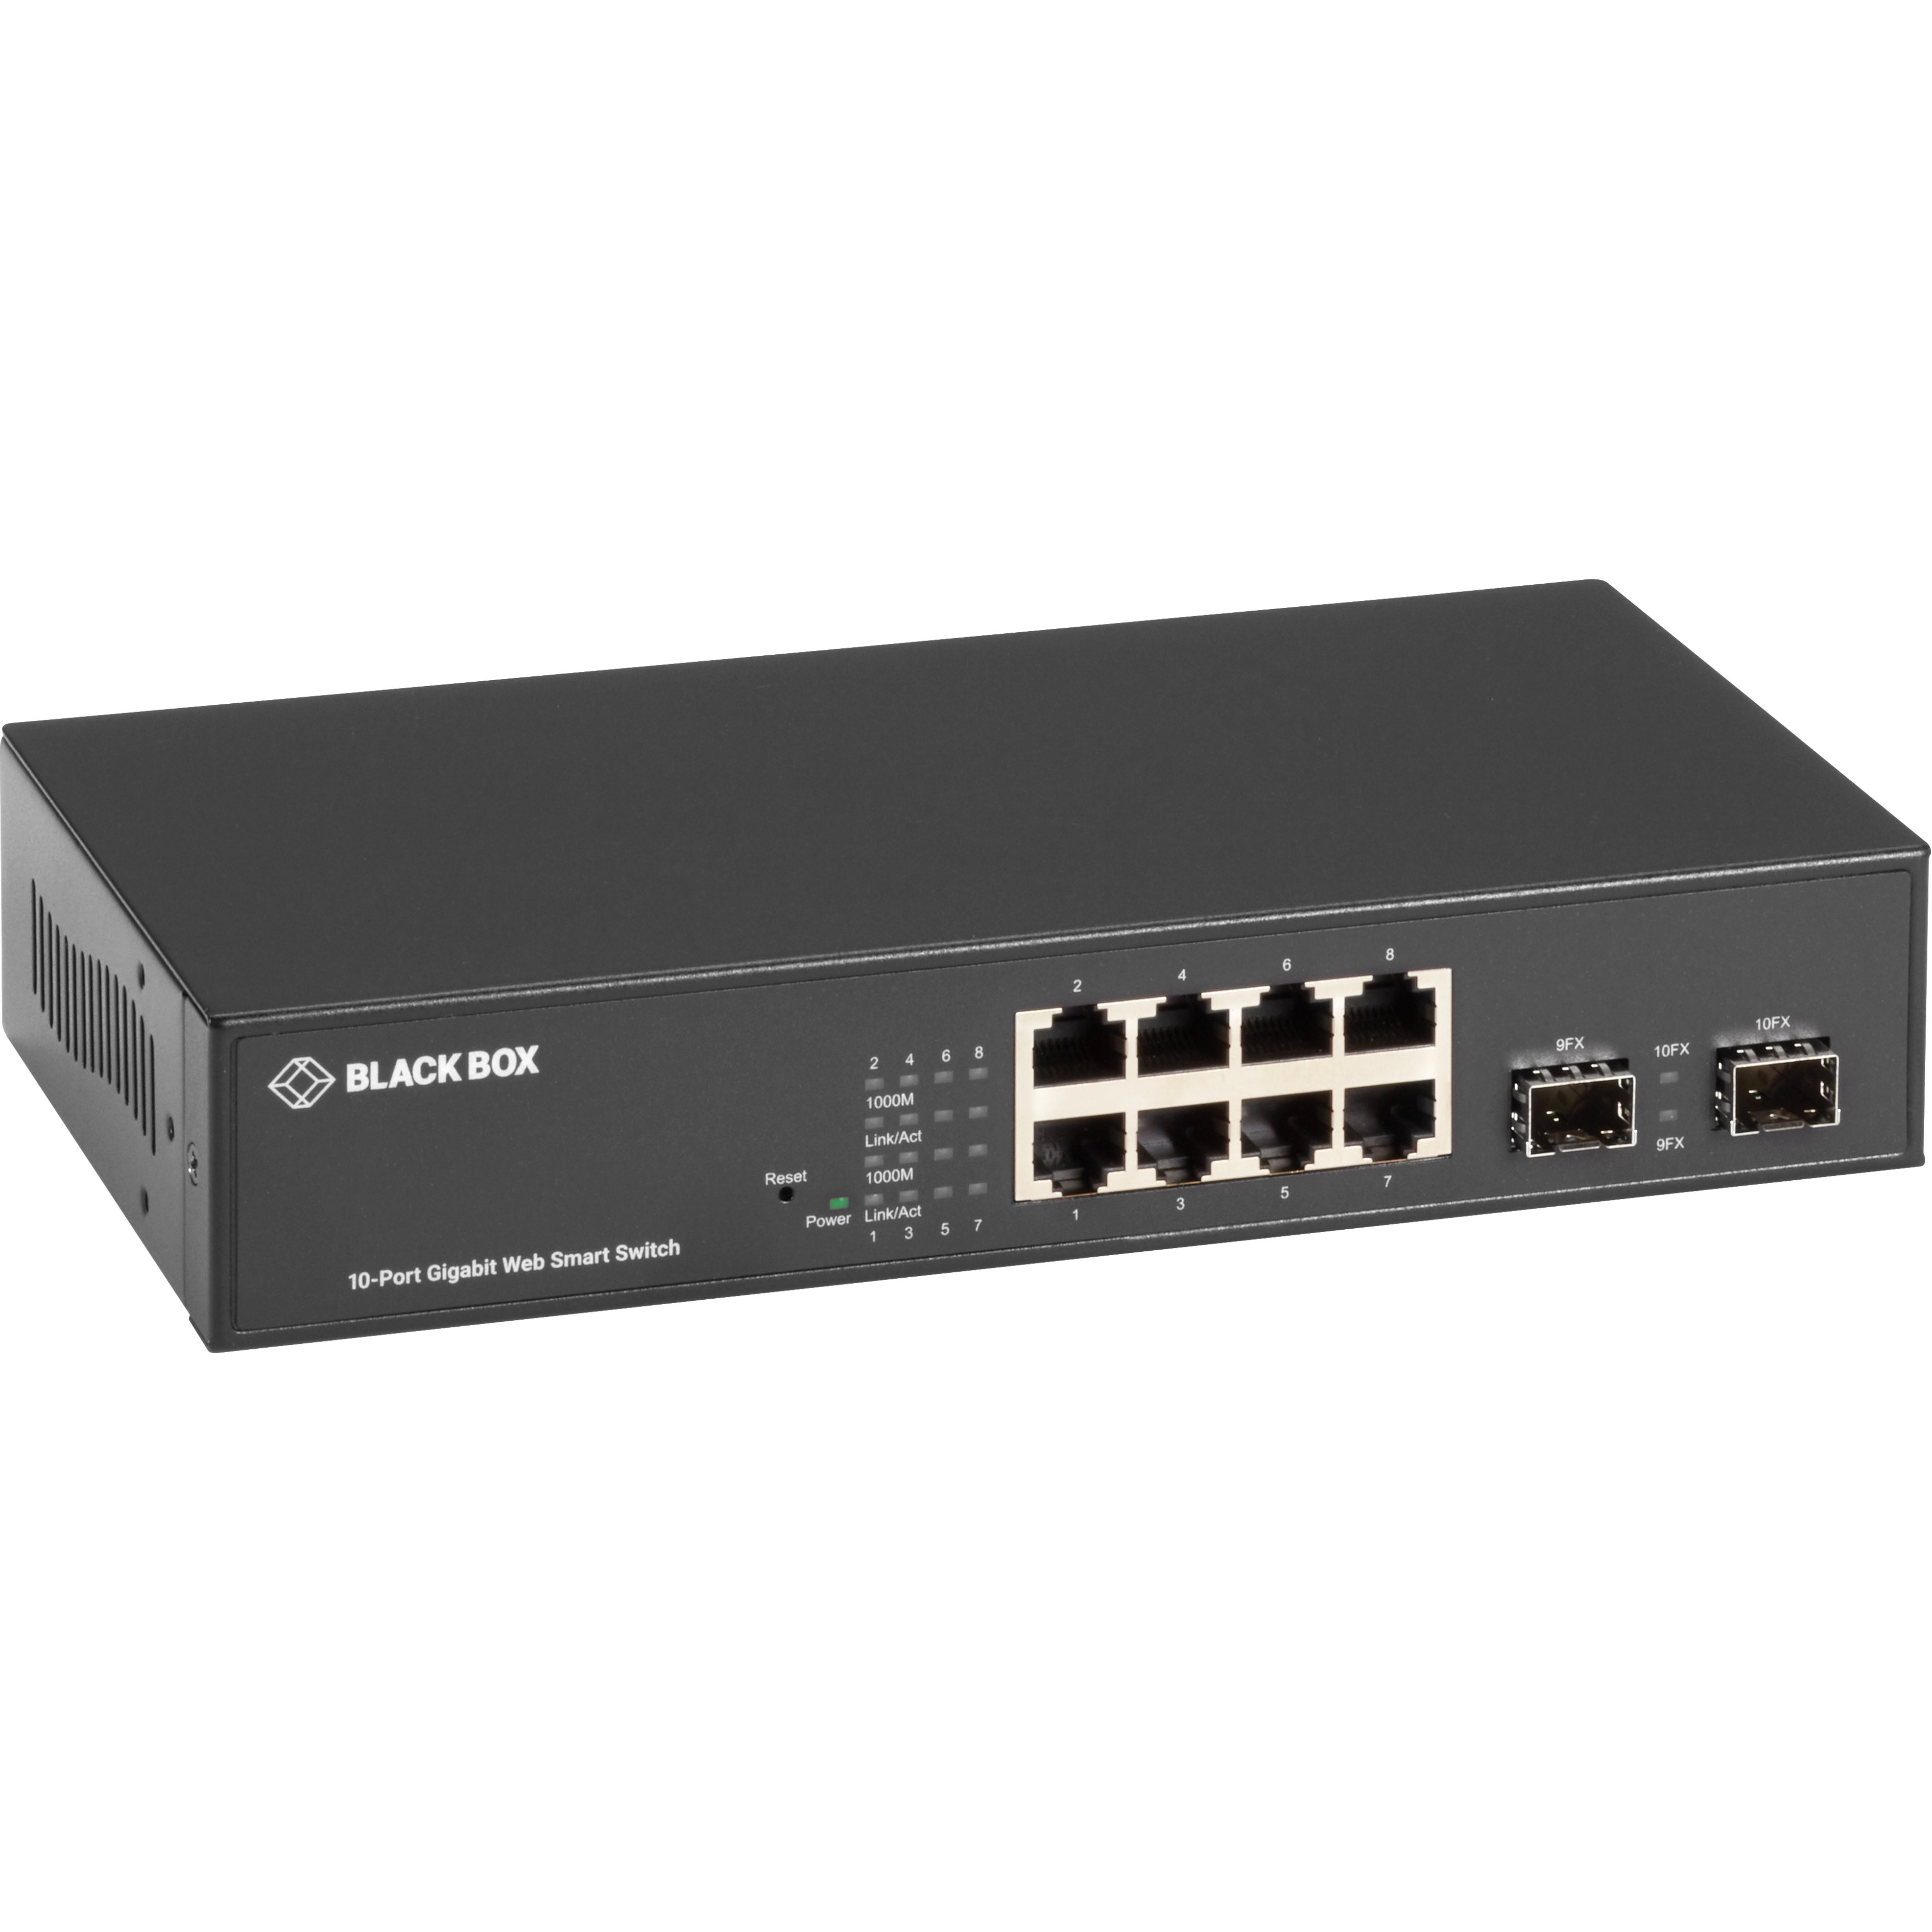 Black Box LGB710A GIGABIT WEB SMART SWITCH 10 PORT US, 8 x Gigabit Ethernet Network, 2 x Gigabit Ethernet Uplink